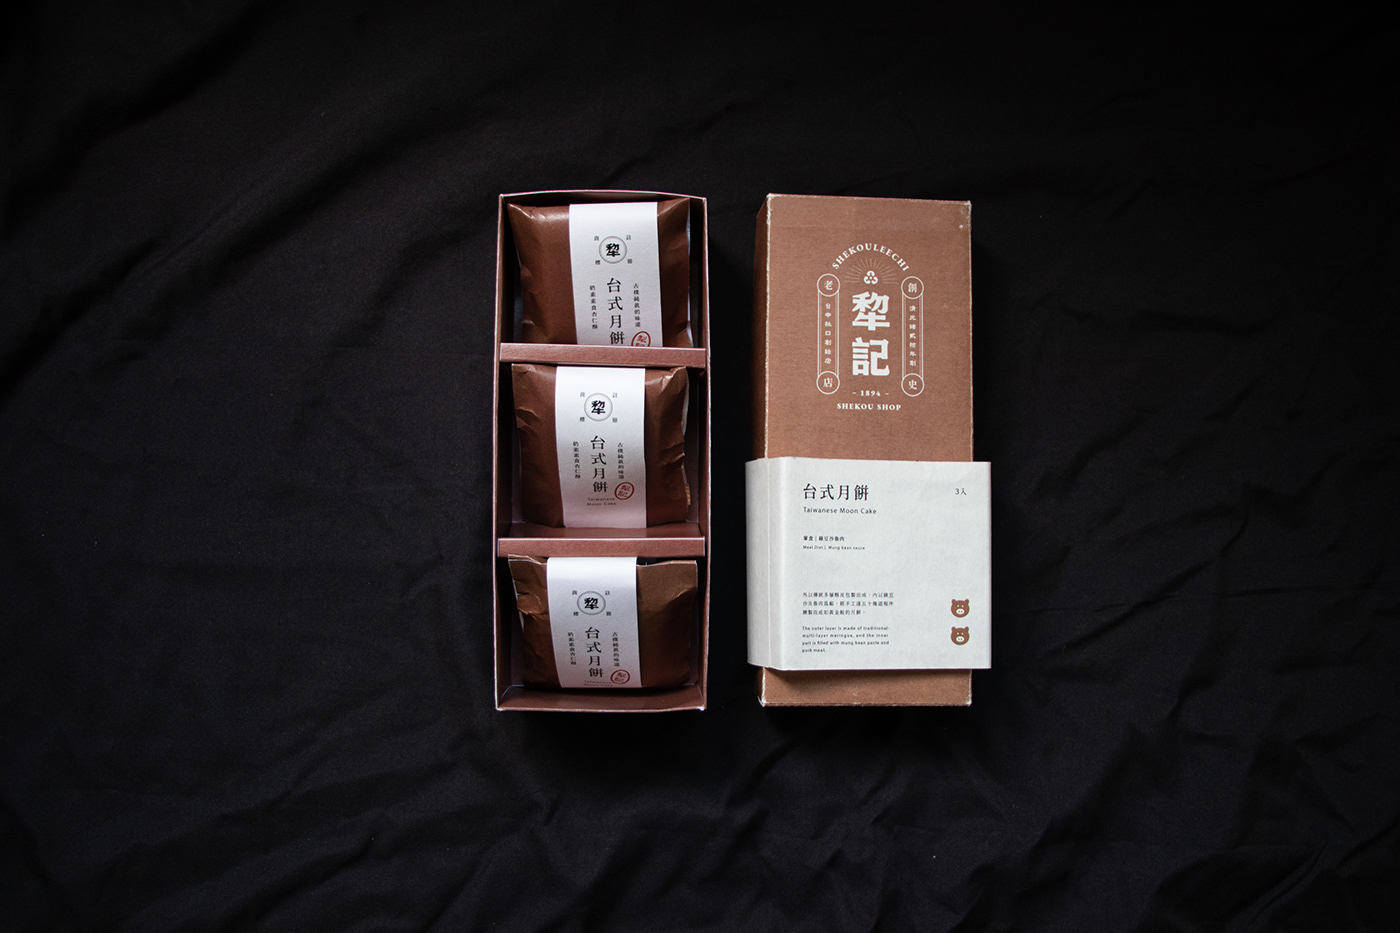 package pastry rebeanding 台中犁記 月餅禮盒包裝設計 包裝 品牌 排版 標準字 老品牌